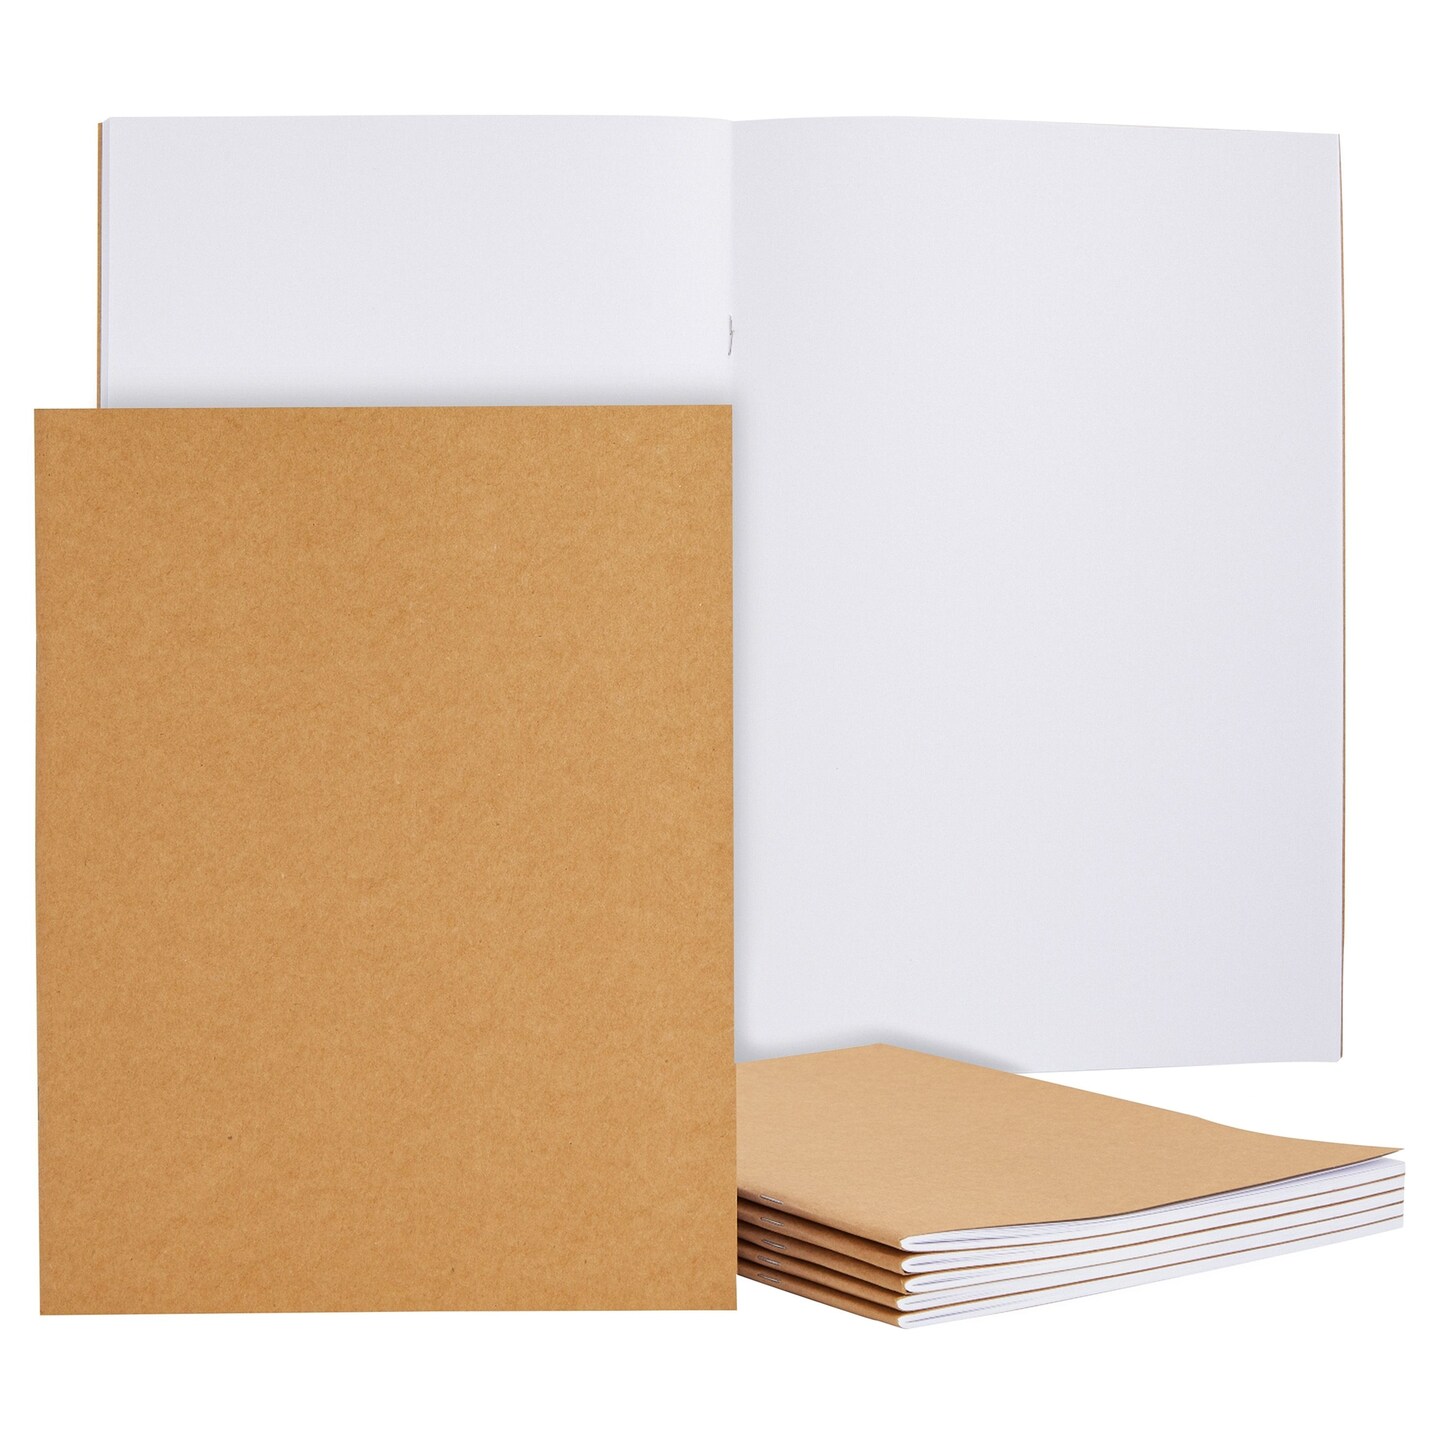 Sketchbook Notebooks & Journals